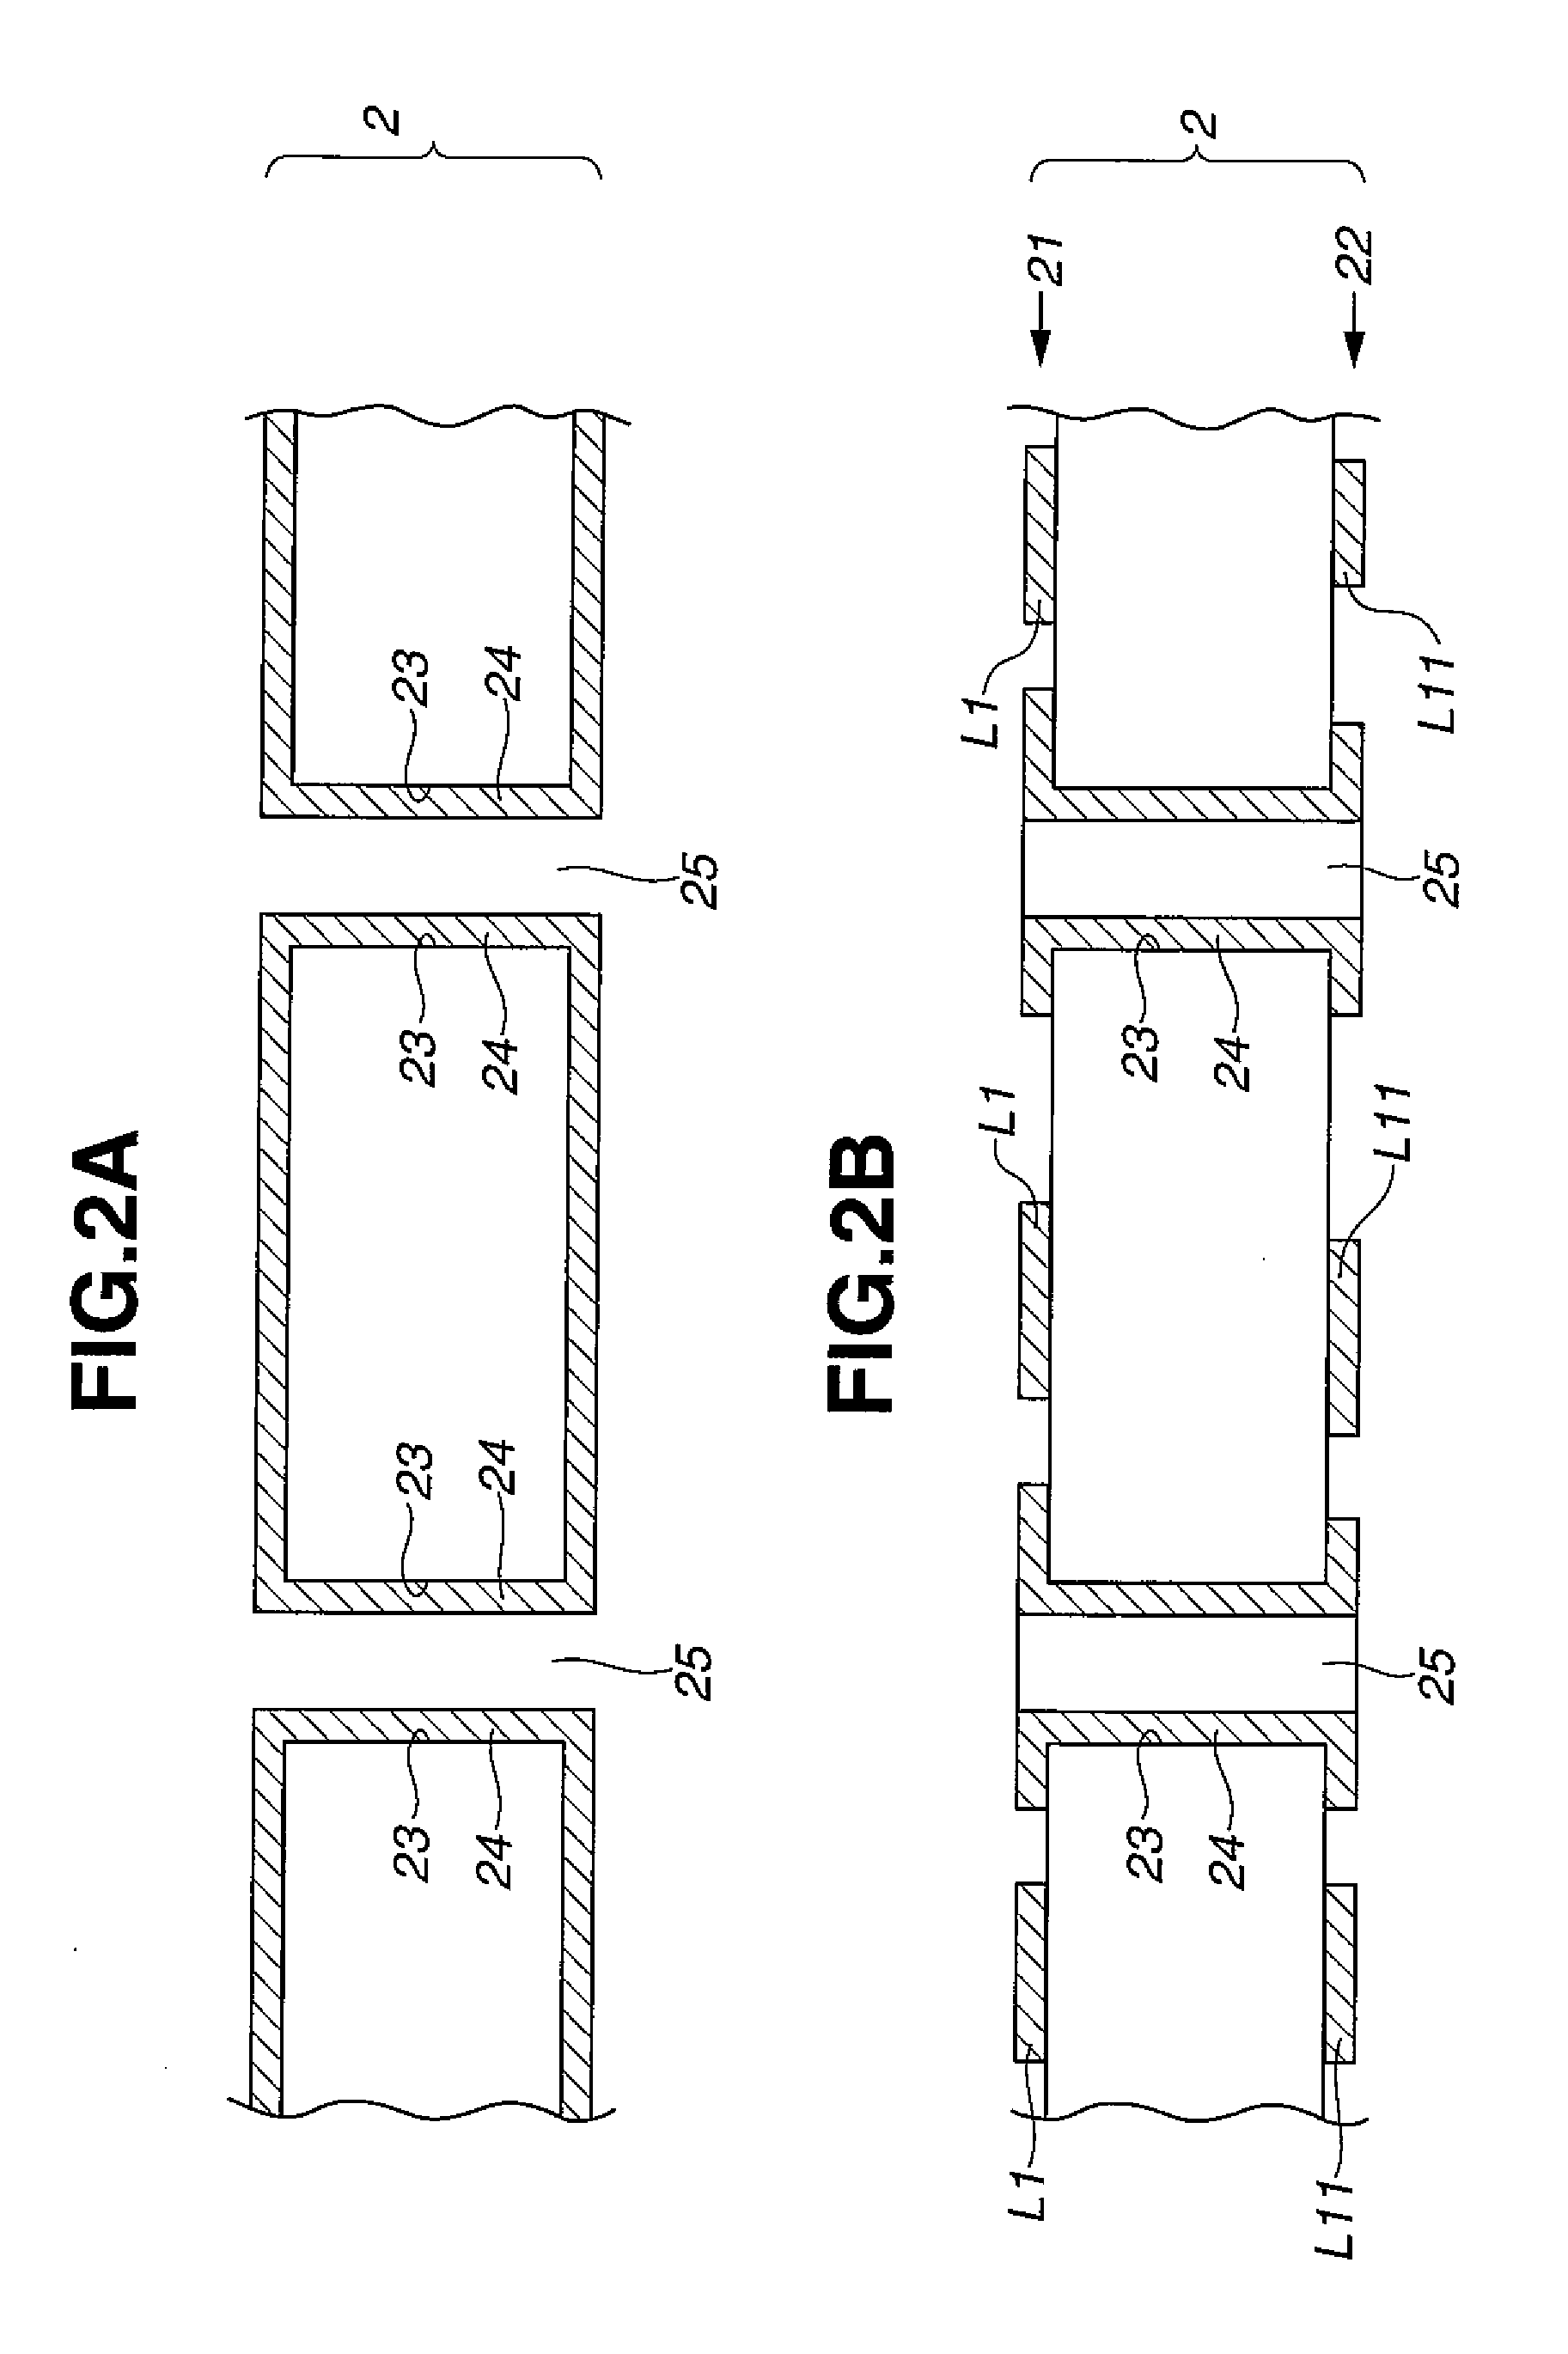 Method of fabricating circuit board